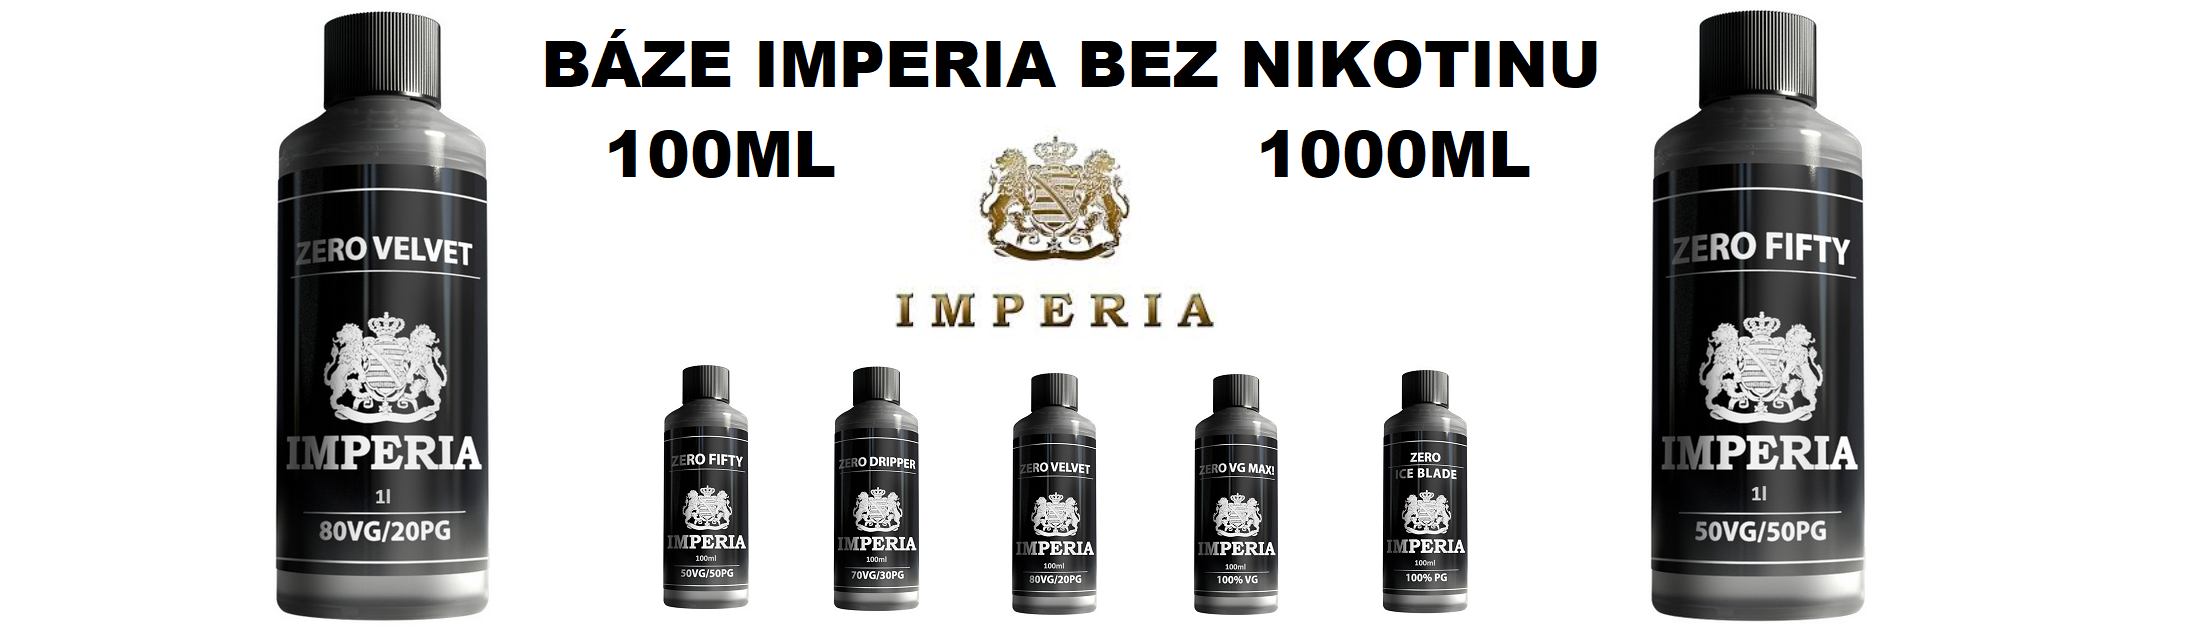 baze-imperia-velvet-fifty-dripper-vg-max-100ml-1000ml-litr-bez-nikotinu_1